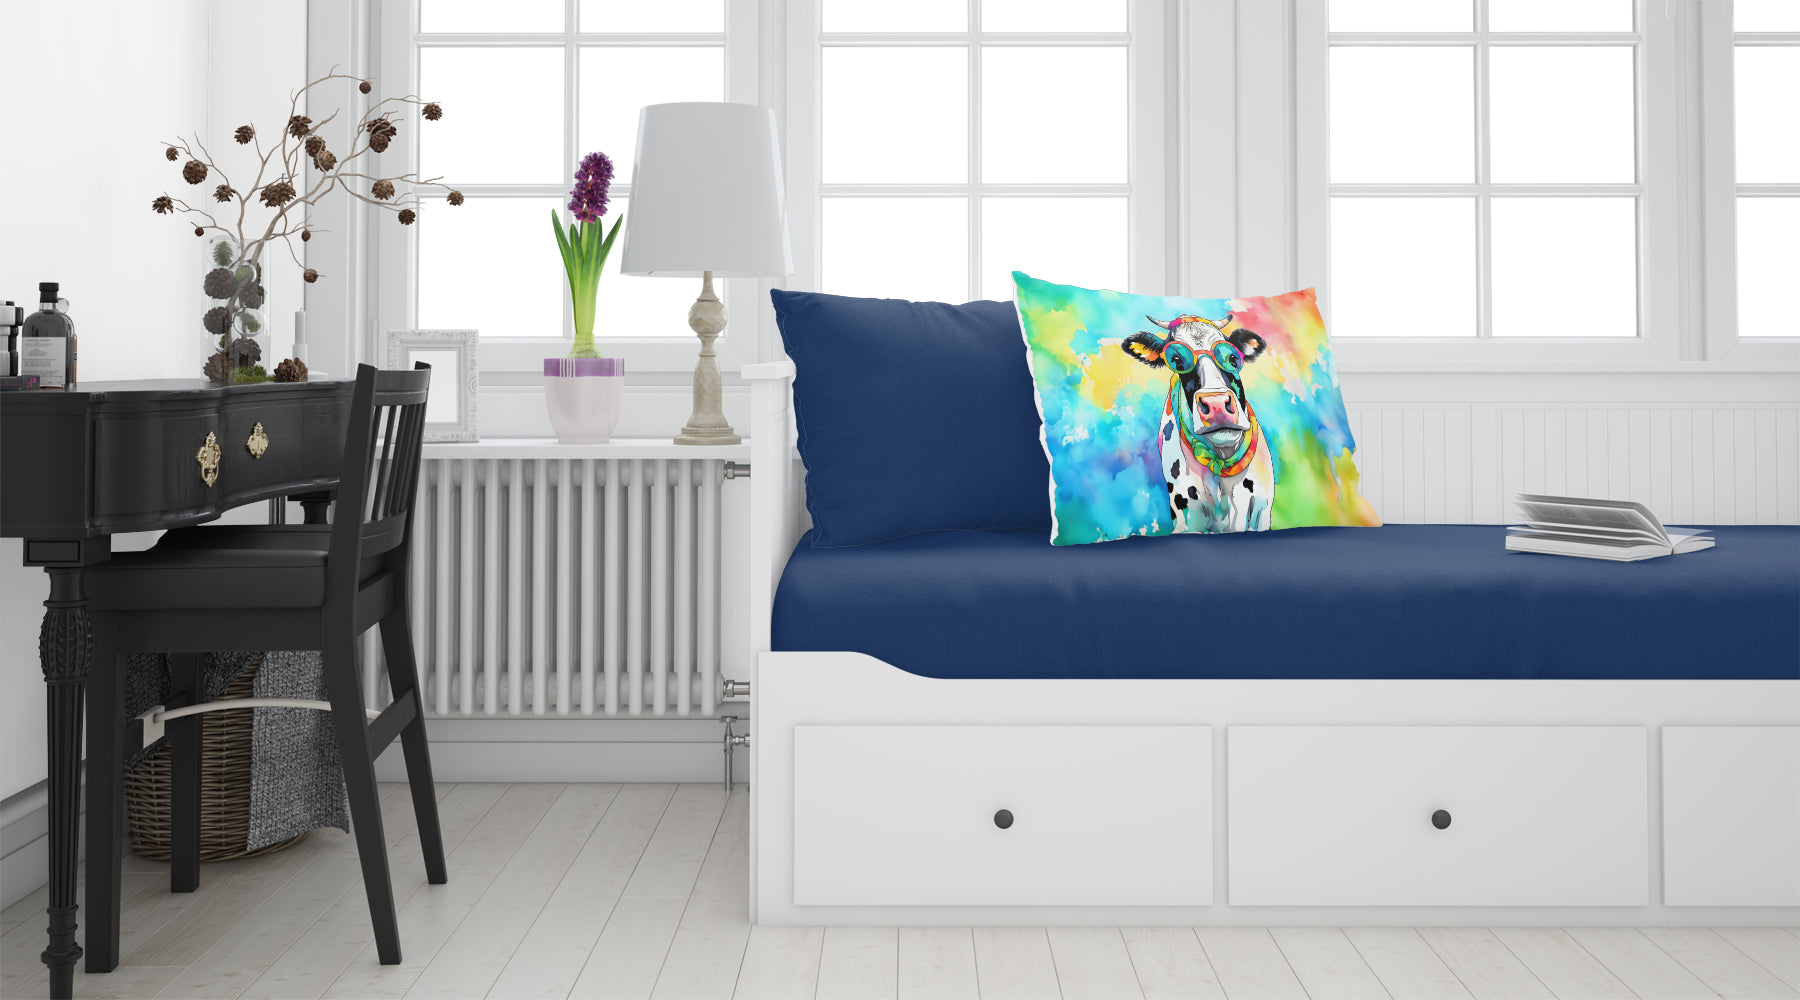 Buy this Hippie Animal Cow Standard Pillowcase